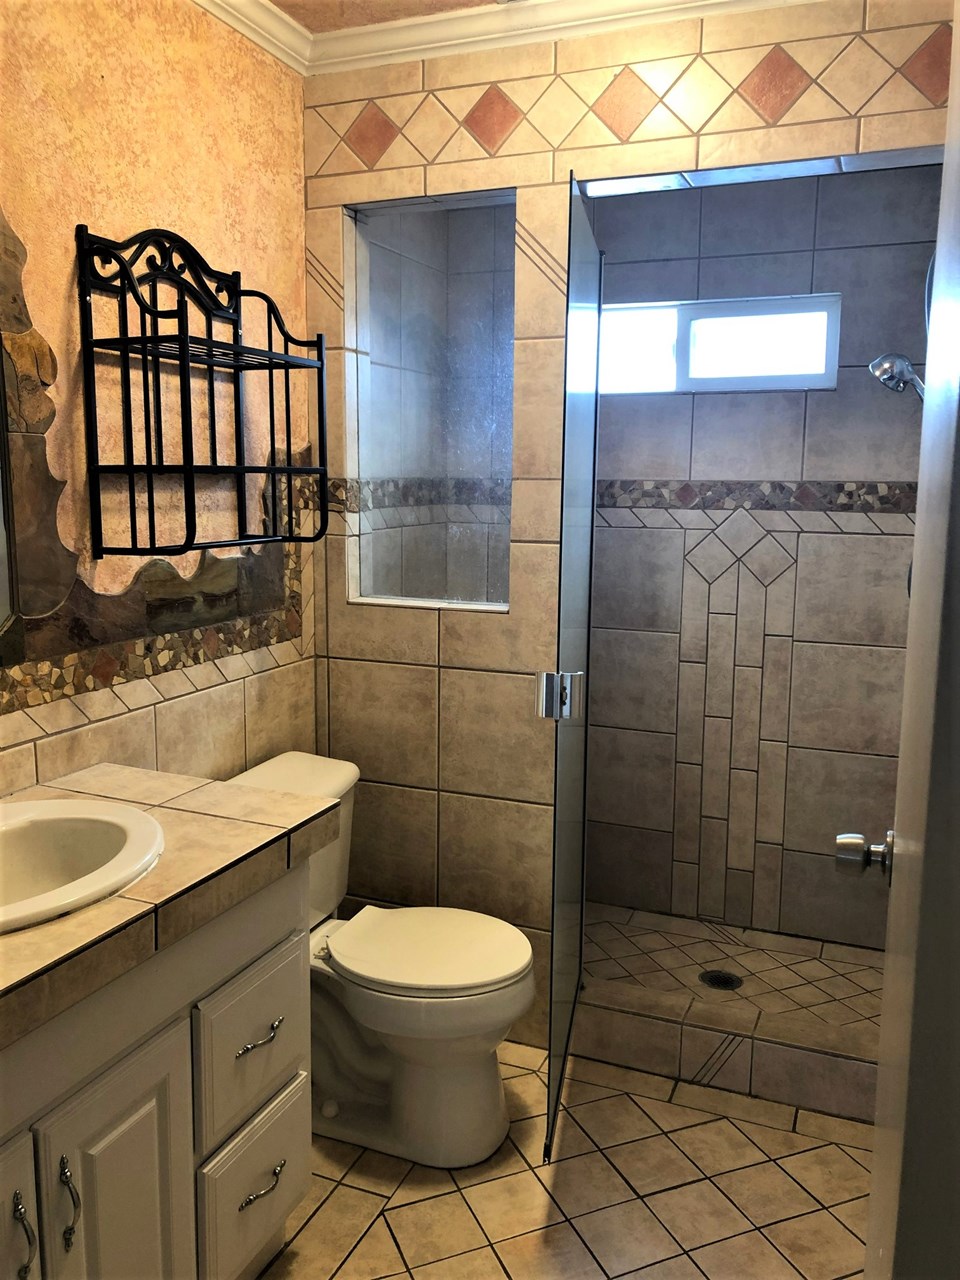 main level bathroom with tiled shower